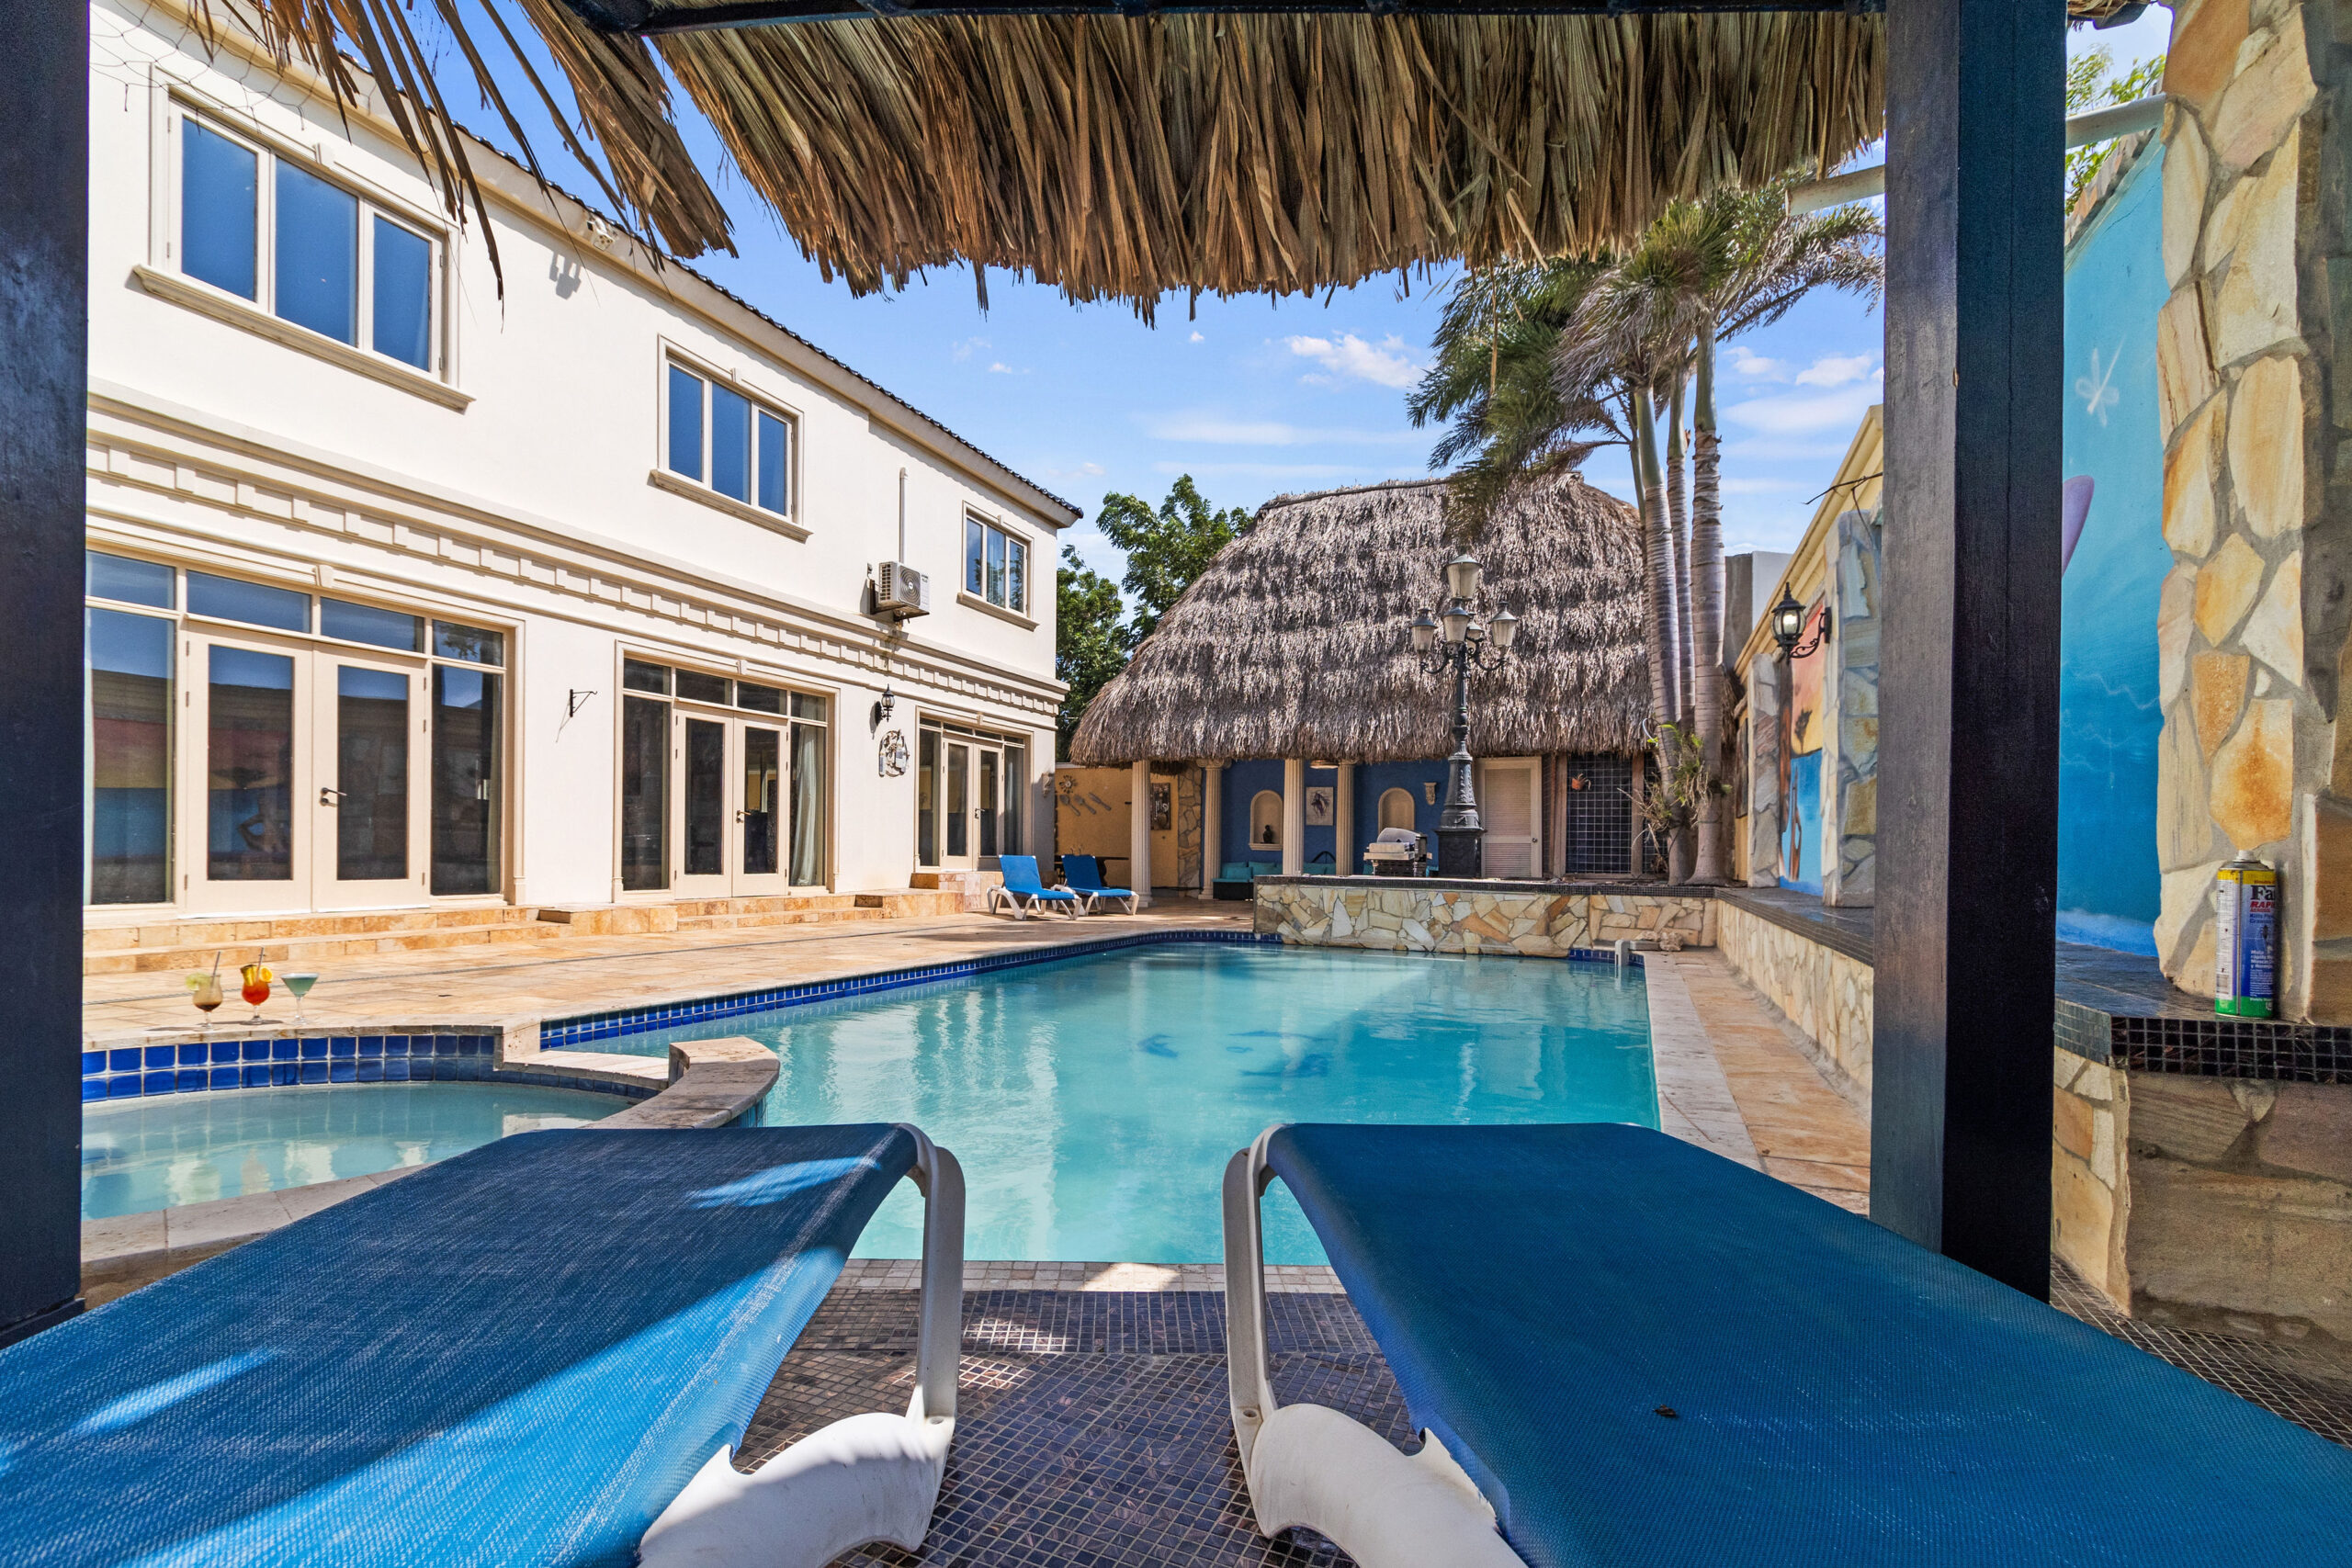 Inviting pool area at La Casa Piu Bella with tropical landscaping.